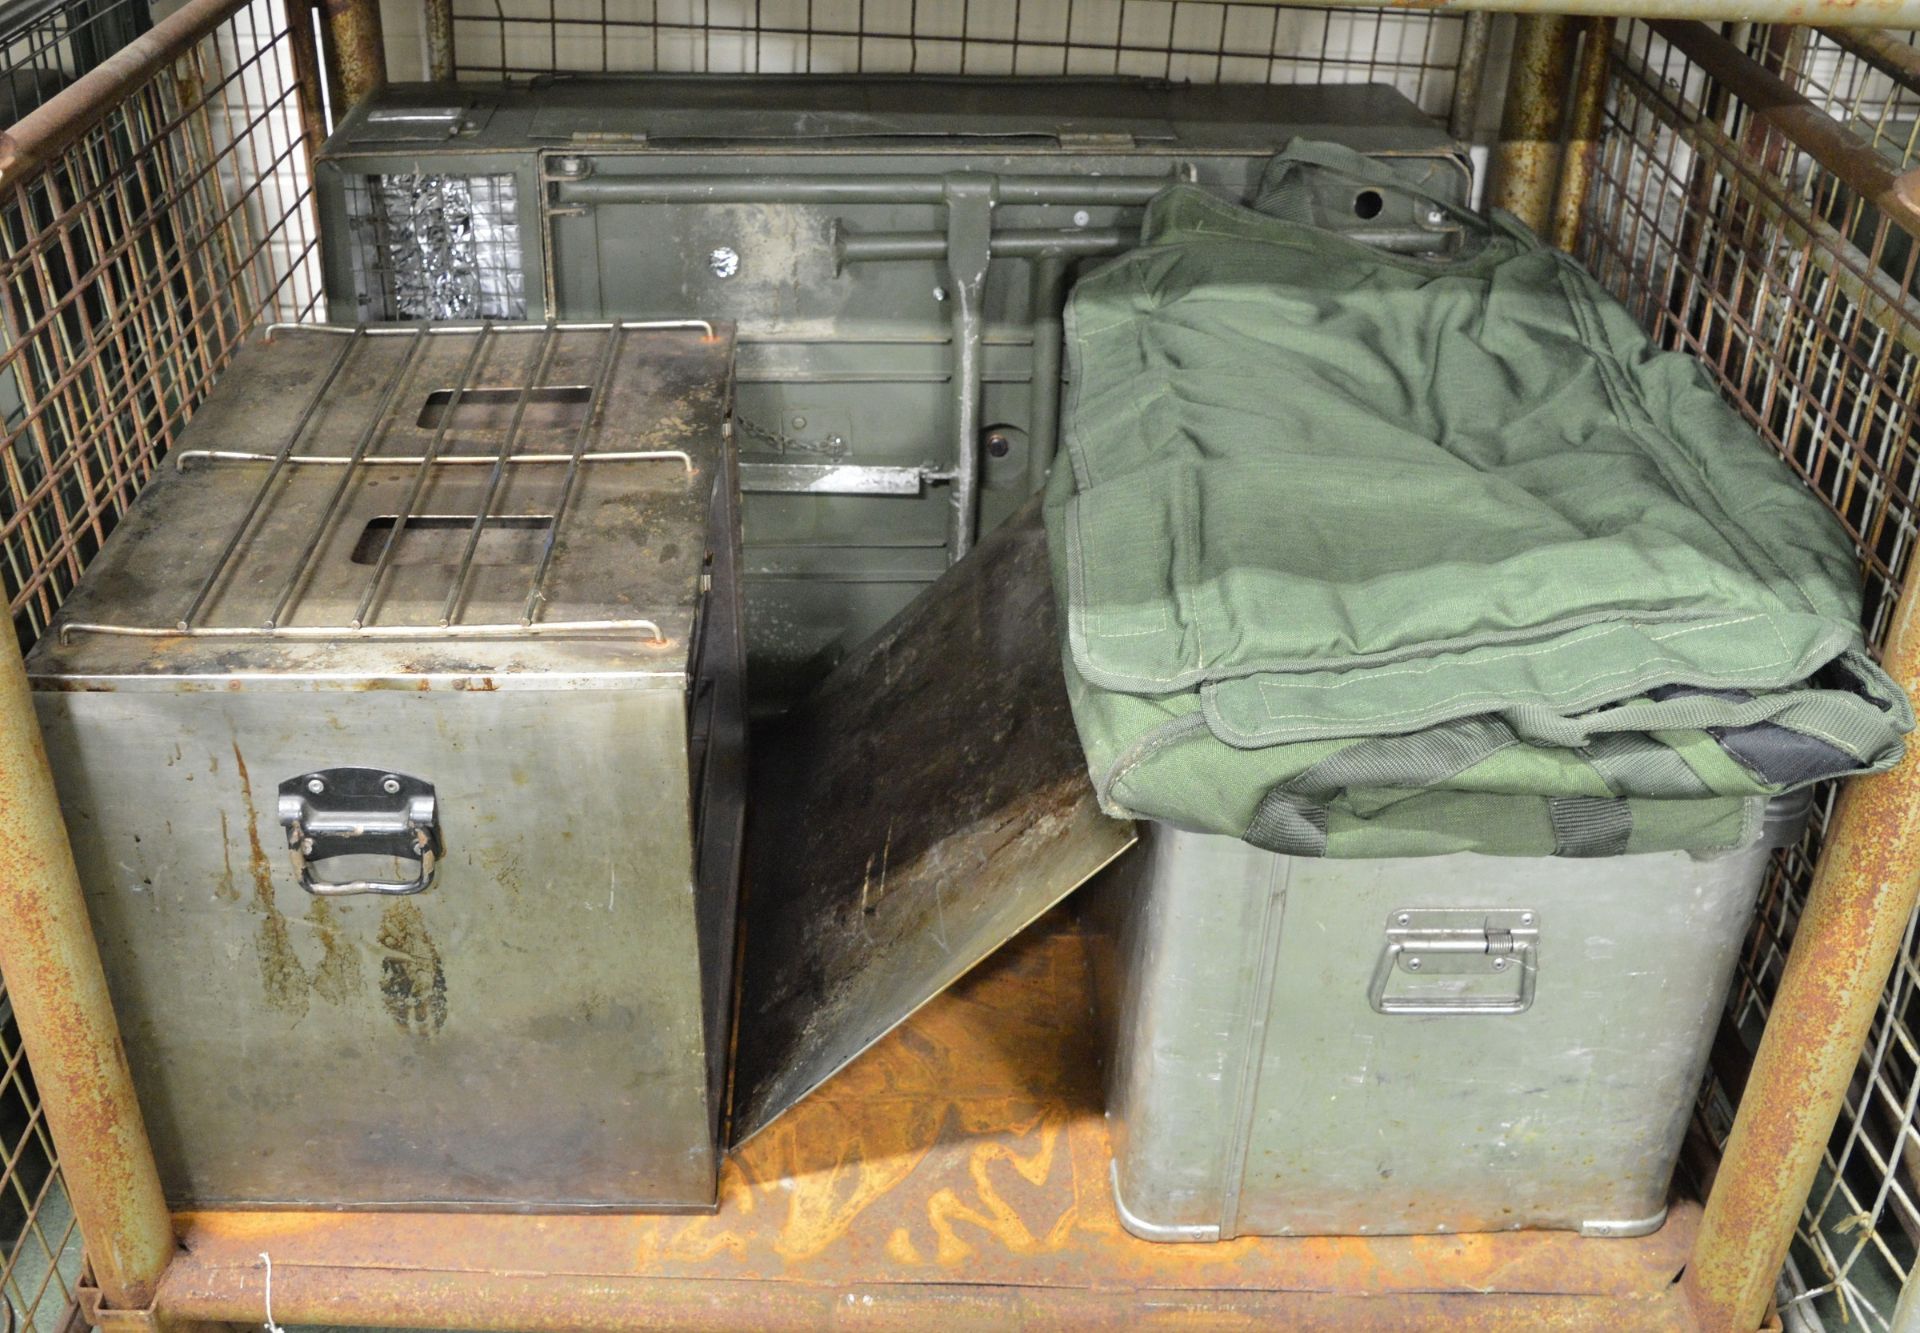 Field Catering Kit - Cooker. Oven, Utensils in storage box, pots, pans, norweigen food box - Image 5 of 6